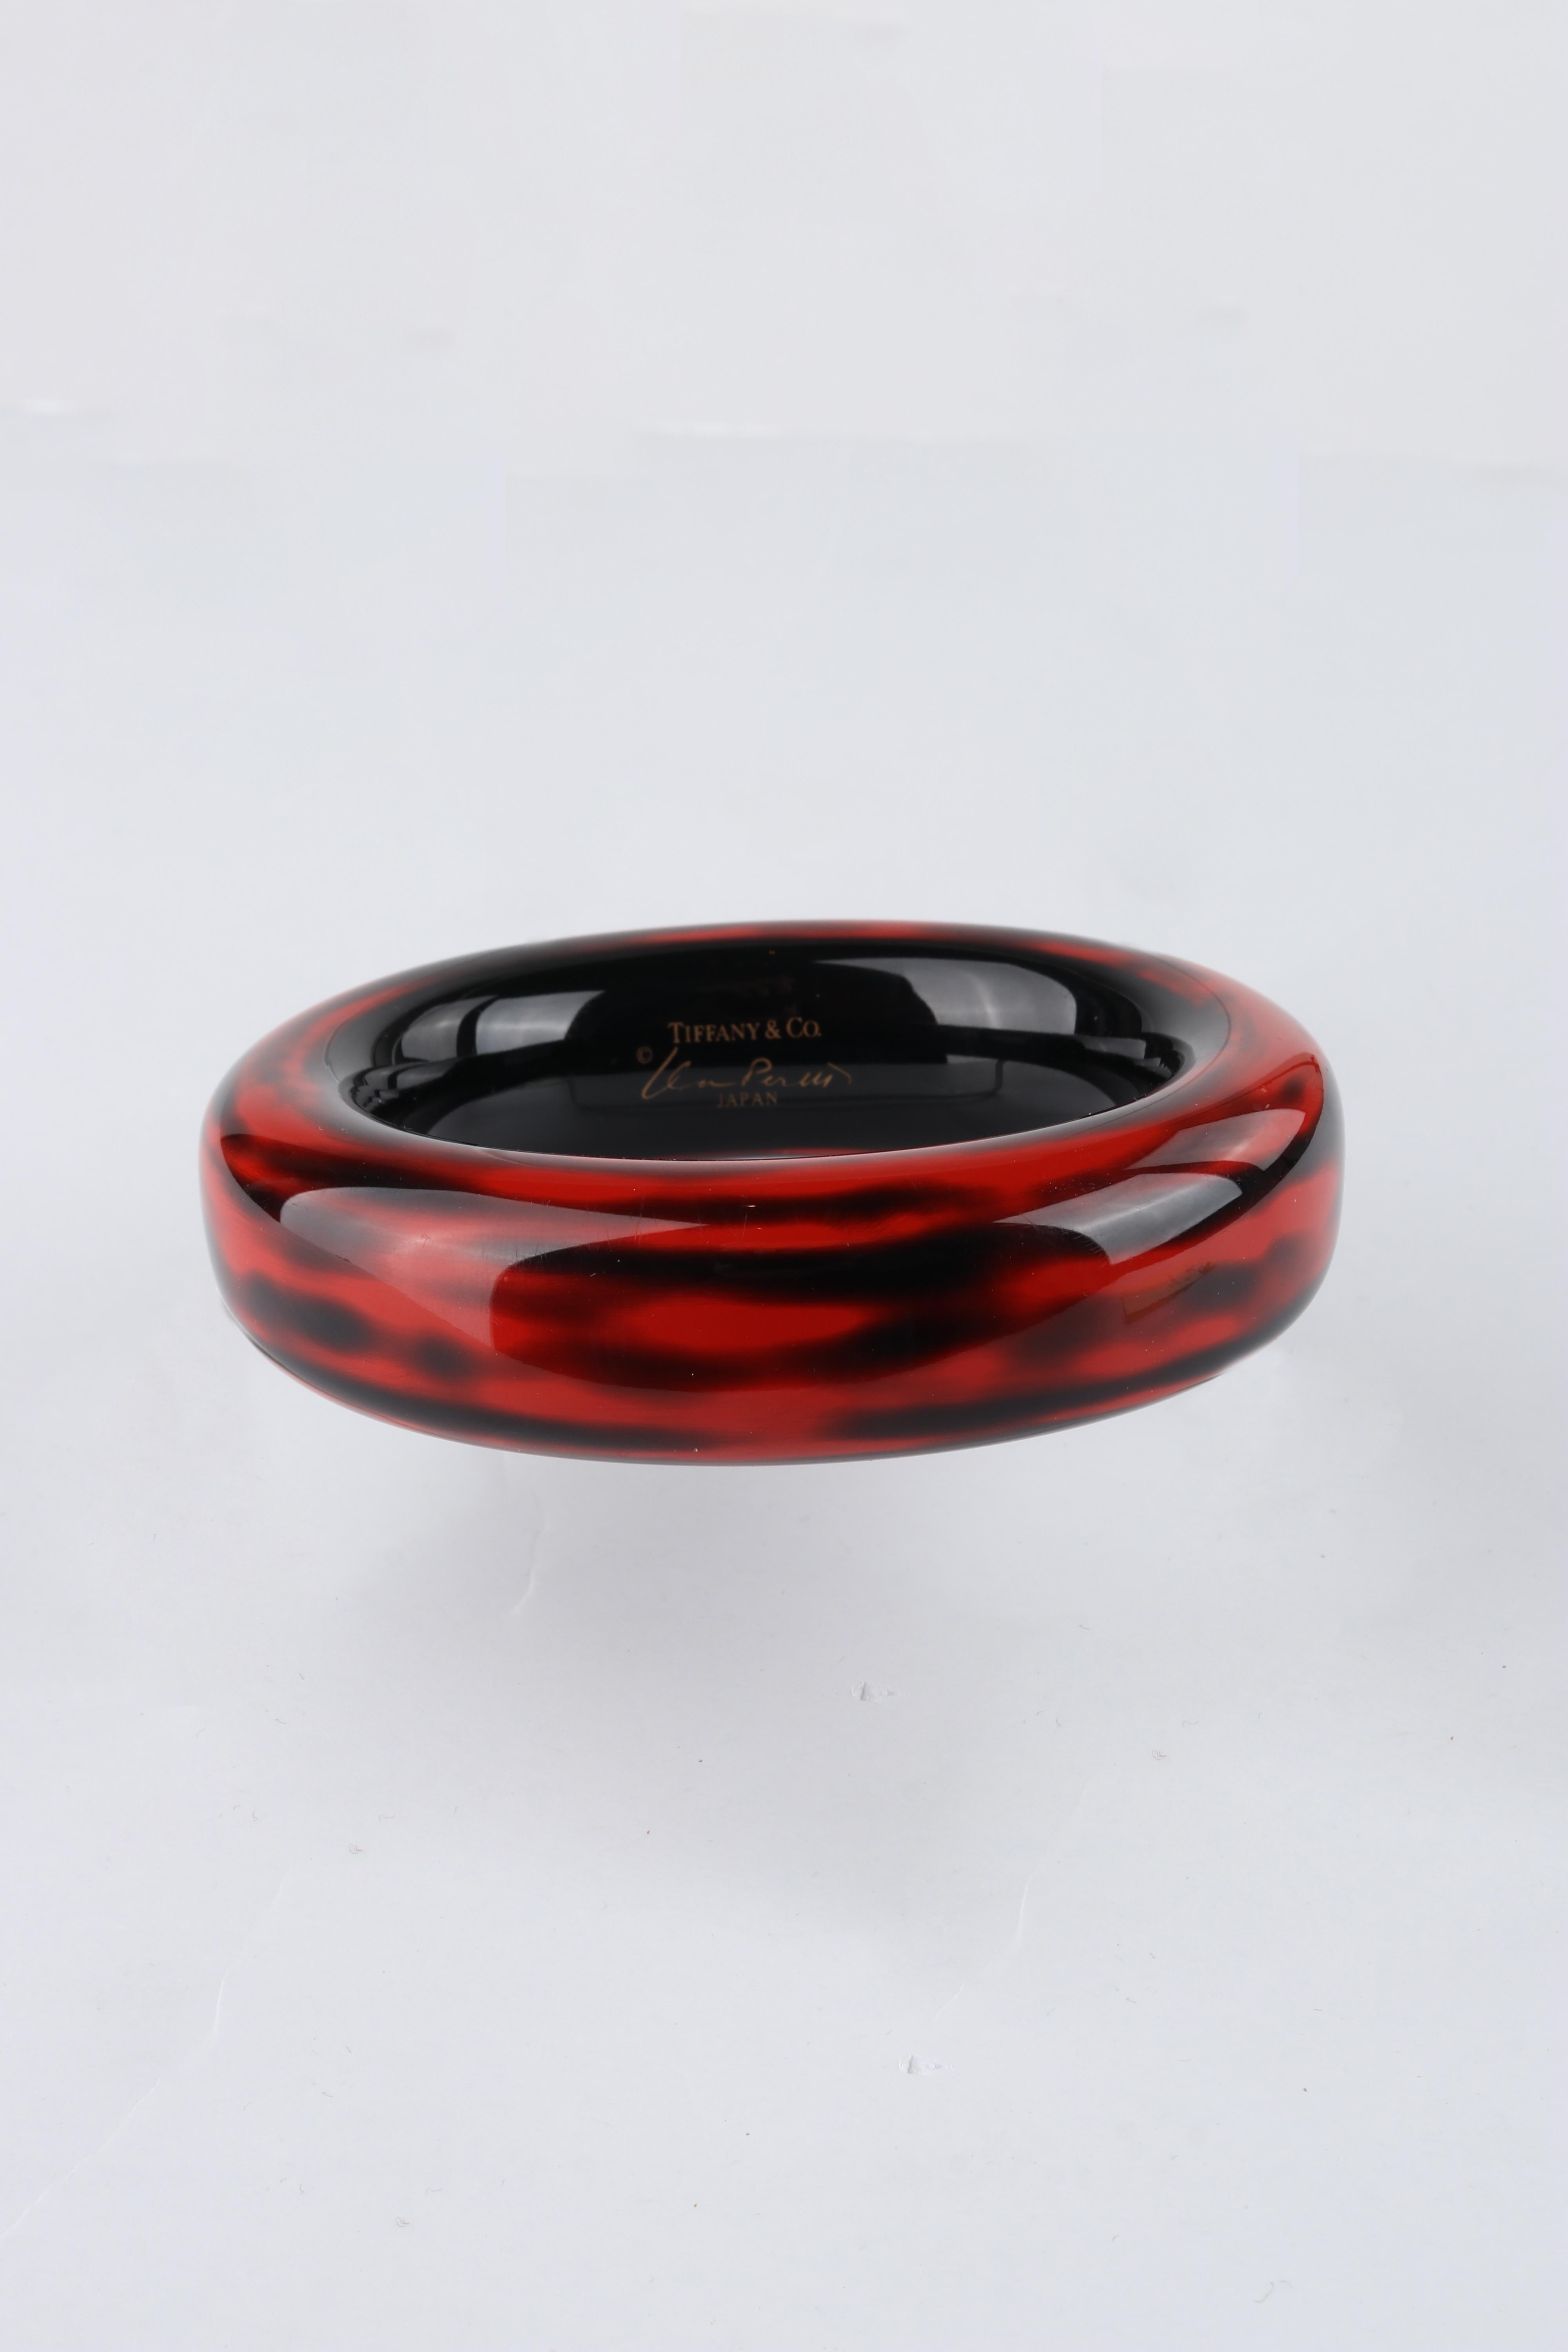 TIFFANY & CO. ELSA PERETTI Black Red Polished Lacquer Hard Wood Bangle Bracelet For Sale 3